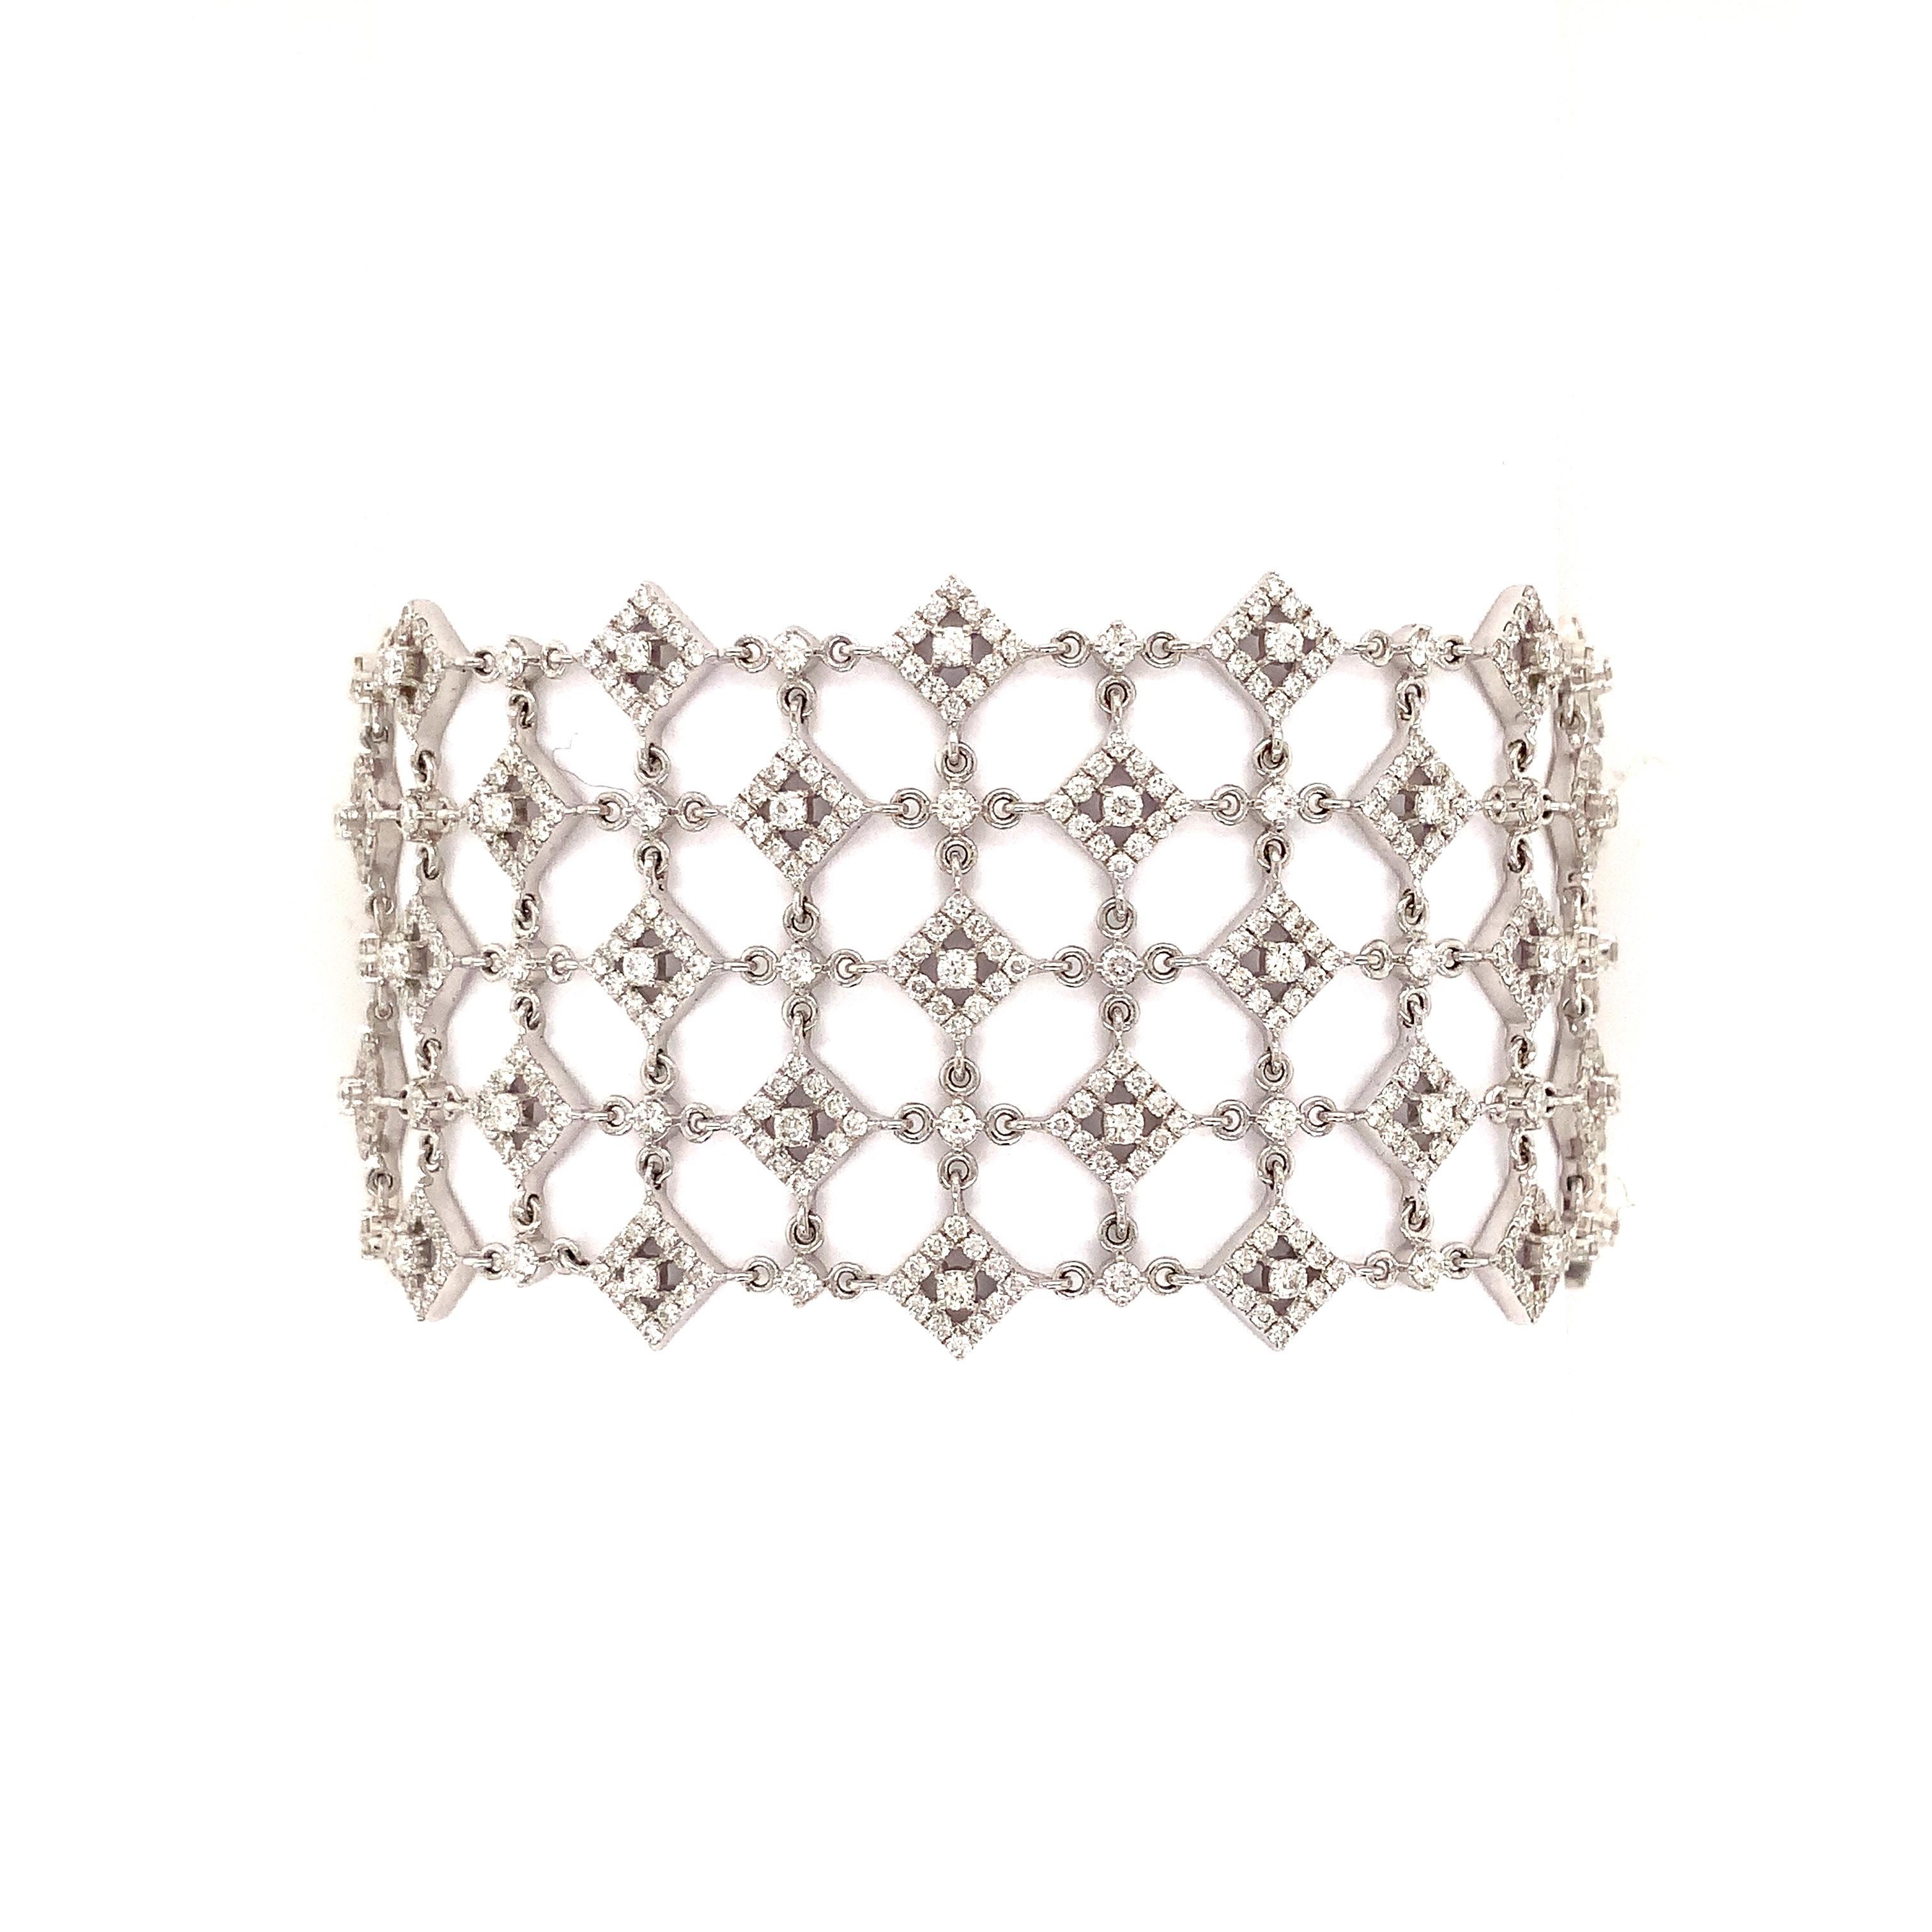 Art Deco Afarin Collection 5 Row Fancy 7 carat Diamond Bracelet set in 18K White Gold For Sale